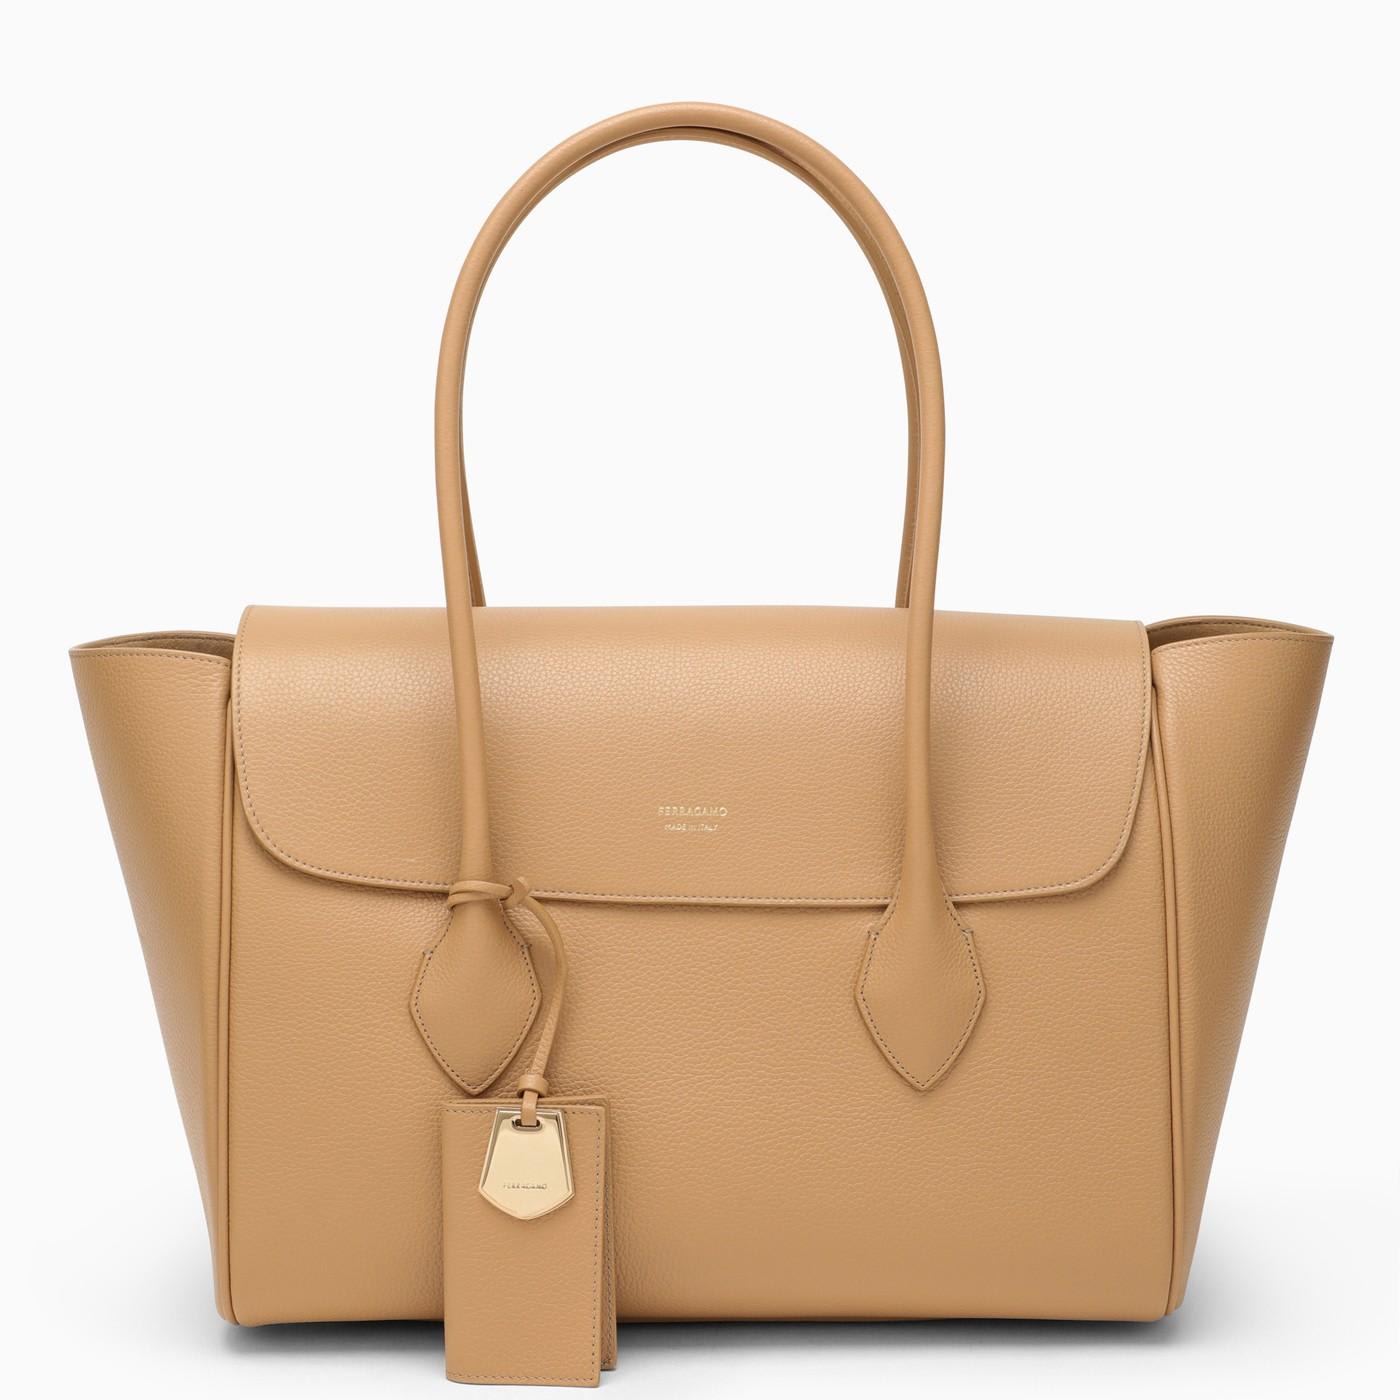 Camel-coloured Leather Tote Bag L